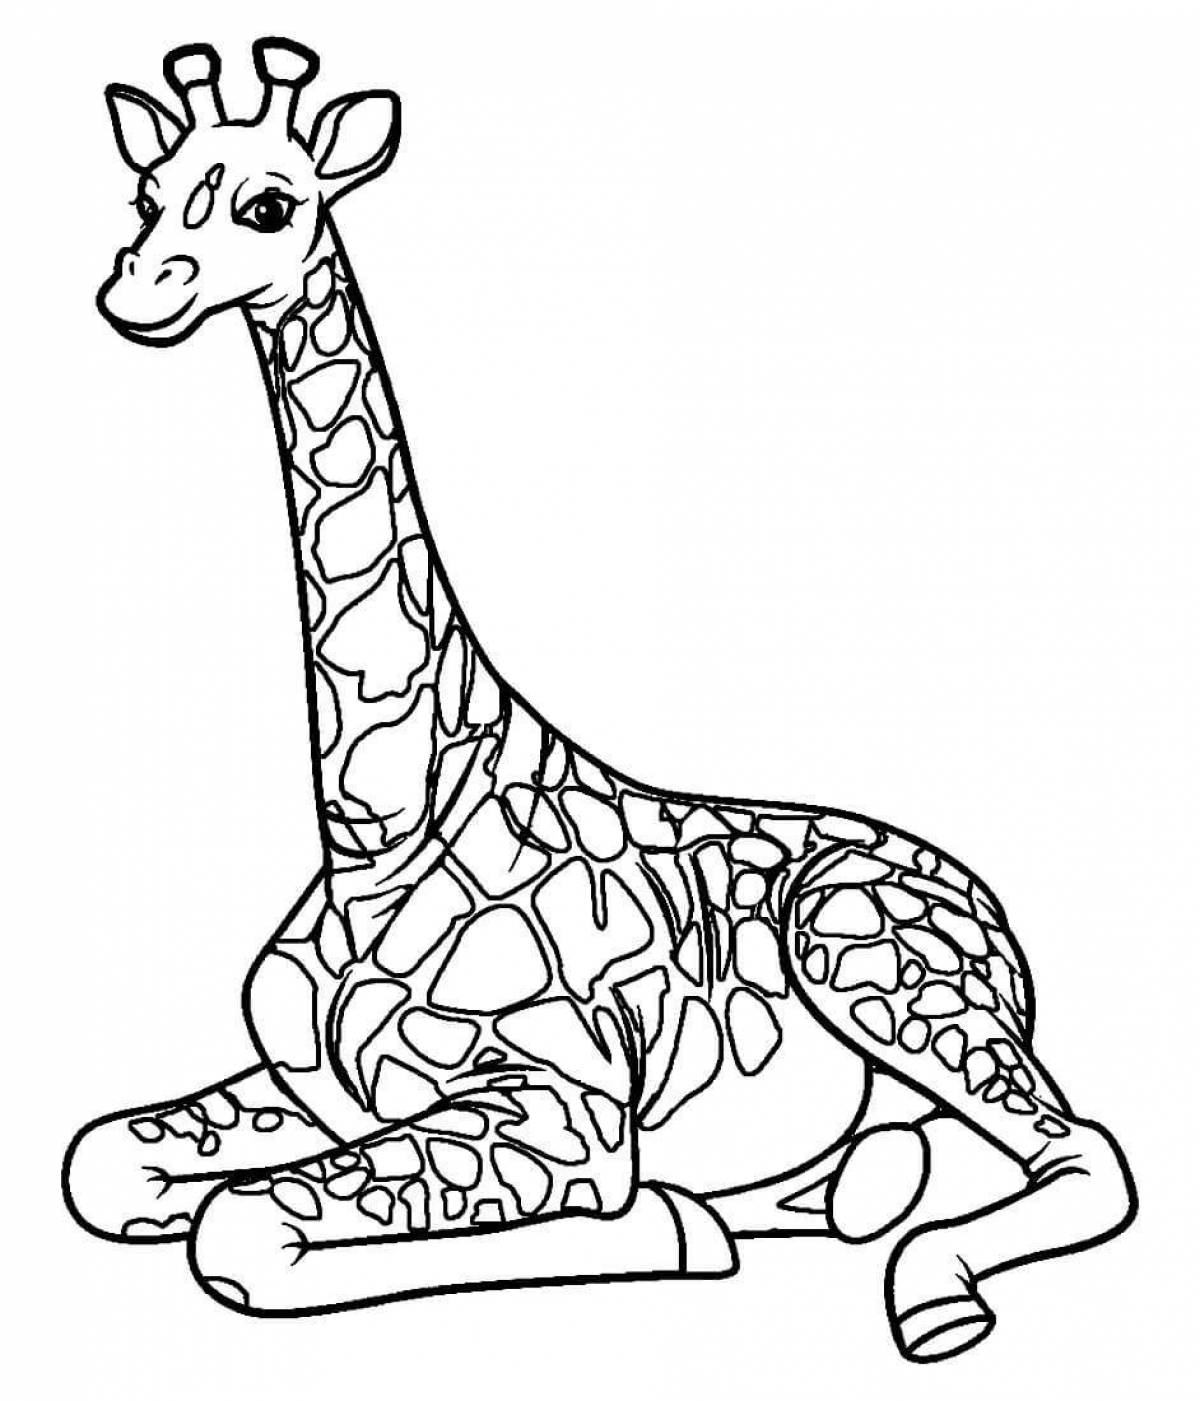 Majestic giraffe coloring page